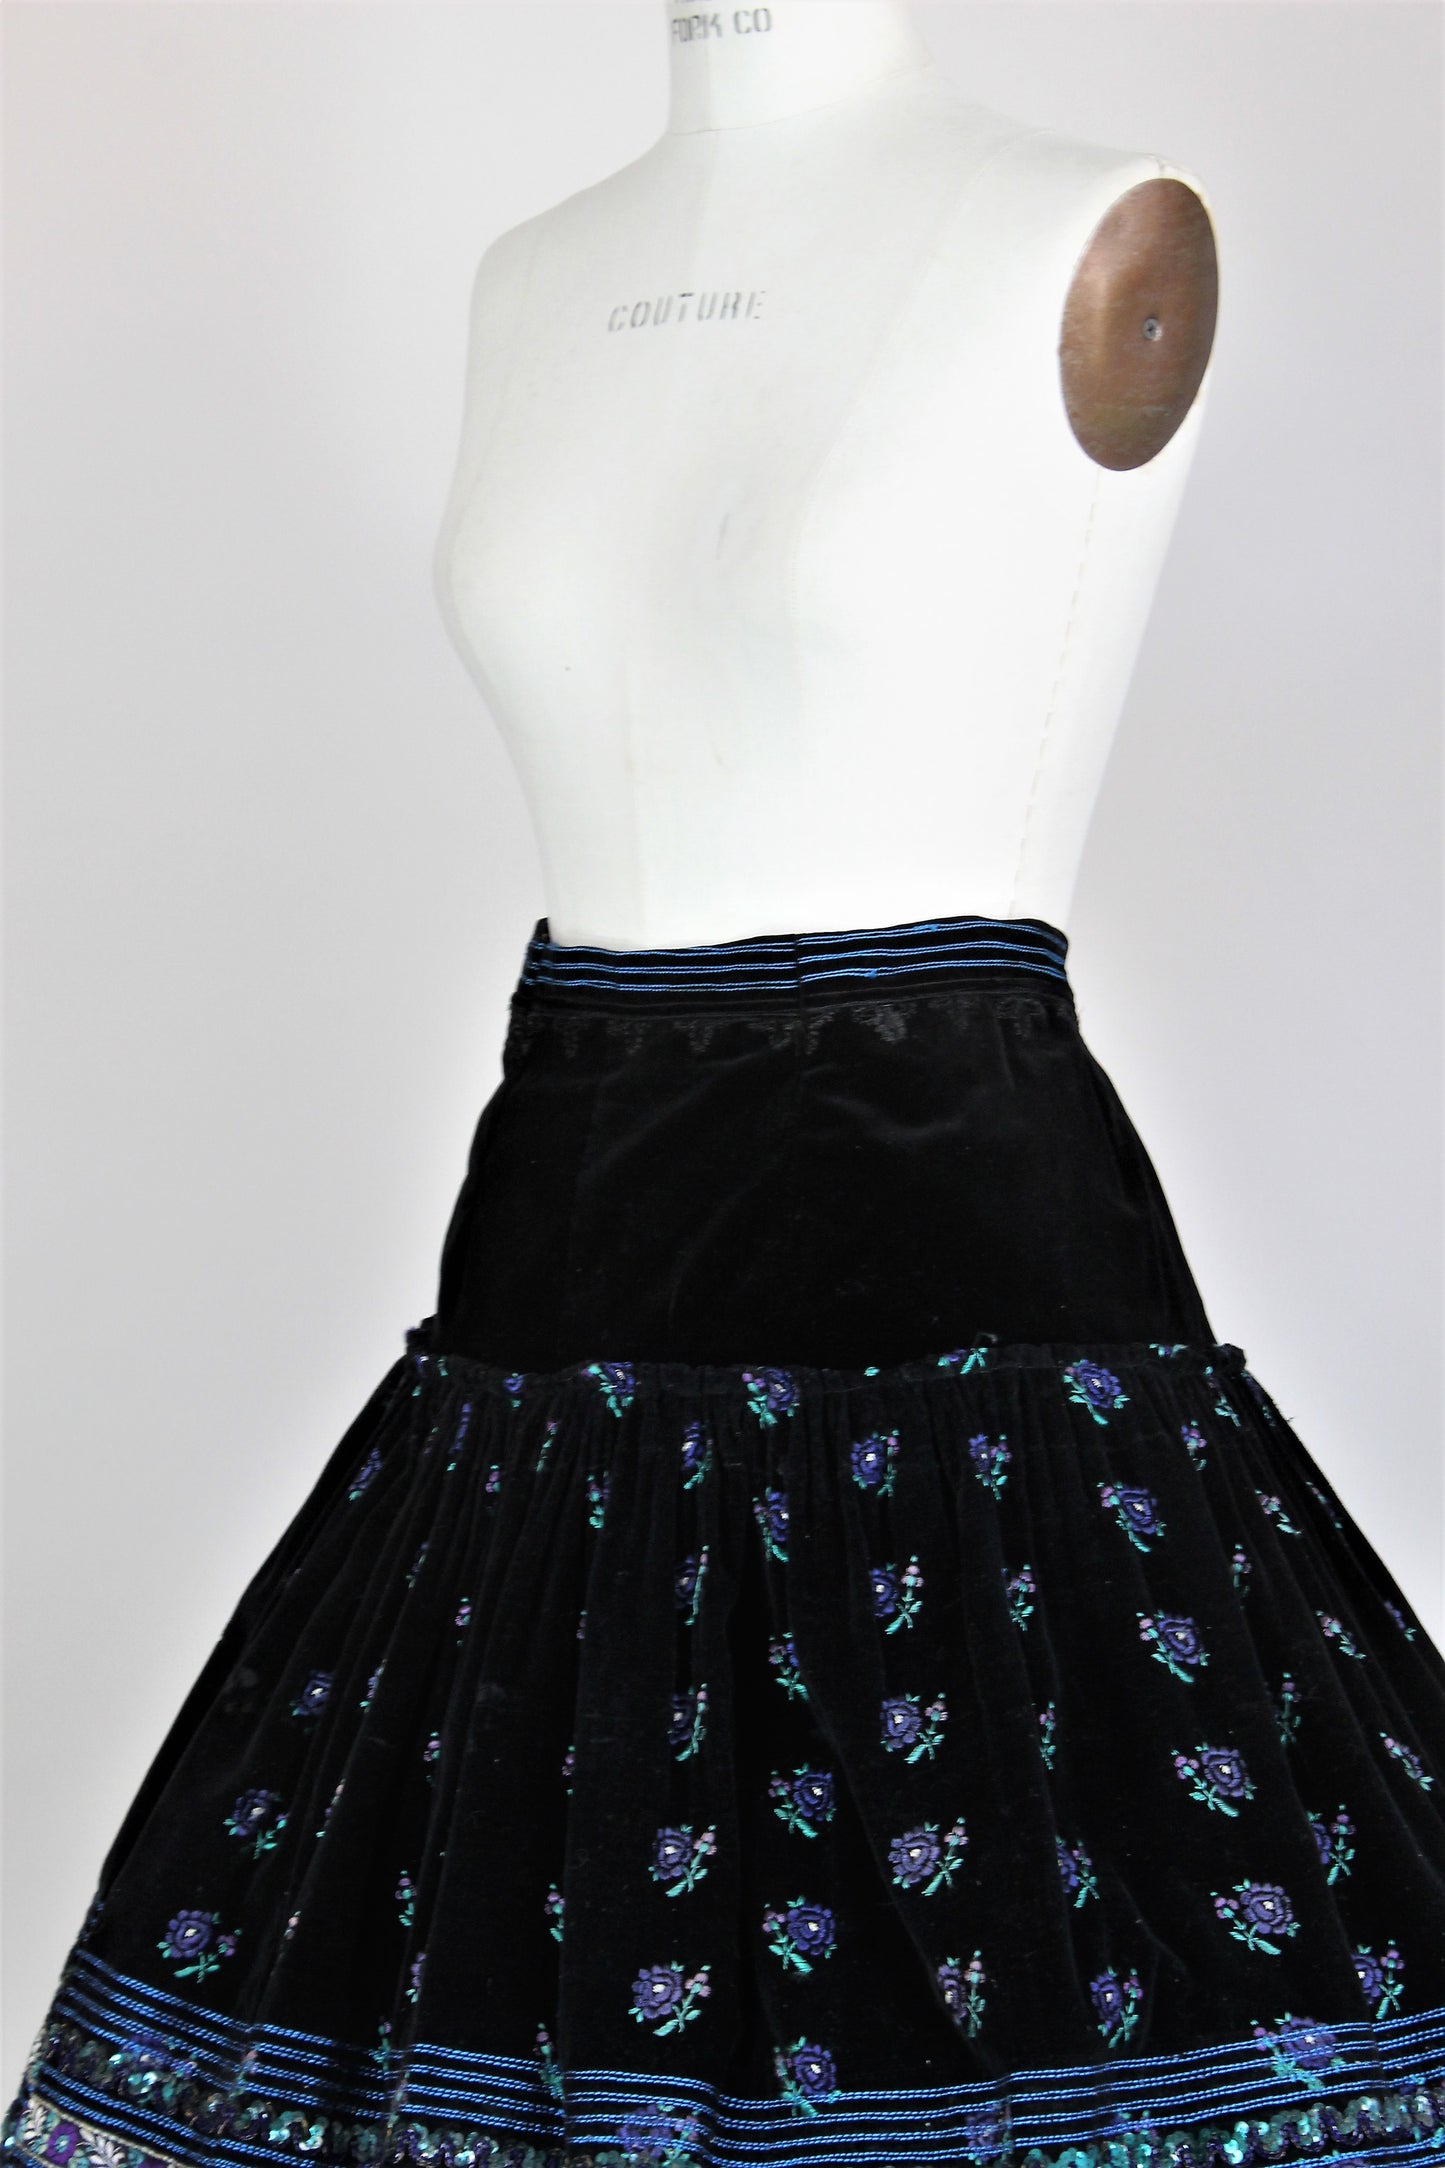 Vintage 1950s Black Velvet Full Skirt With Purple Flower Embroidery and Sequin Trim